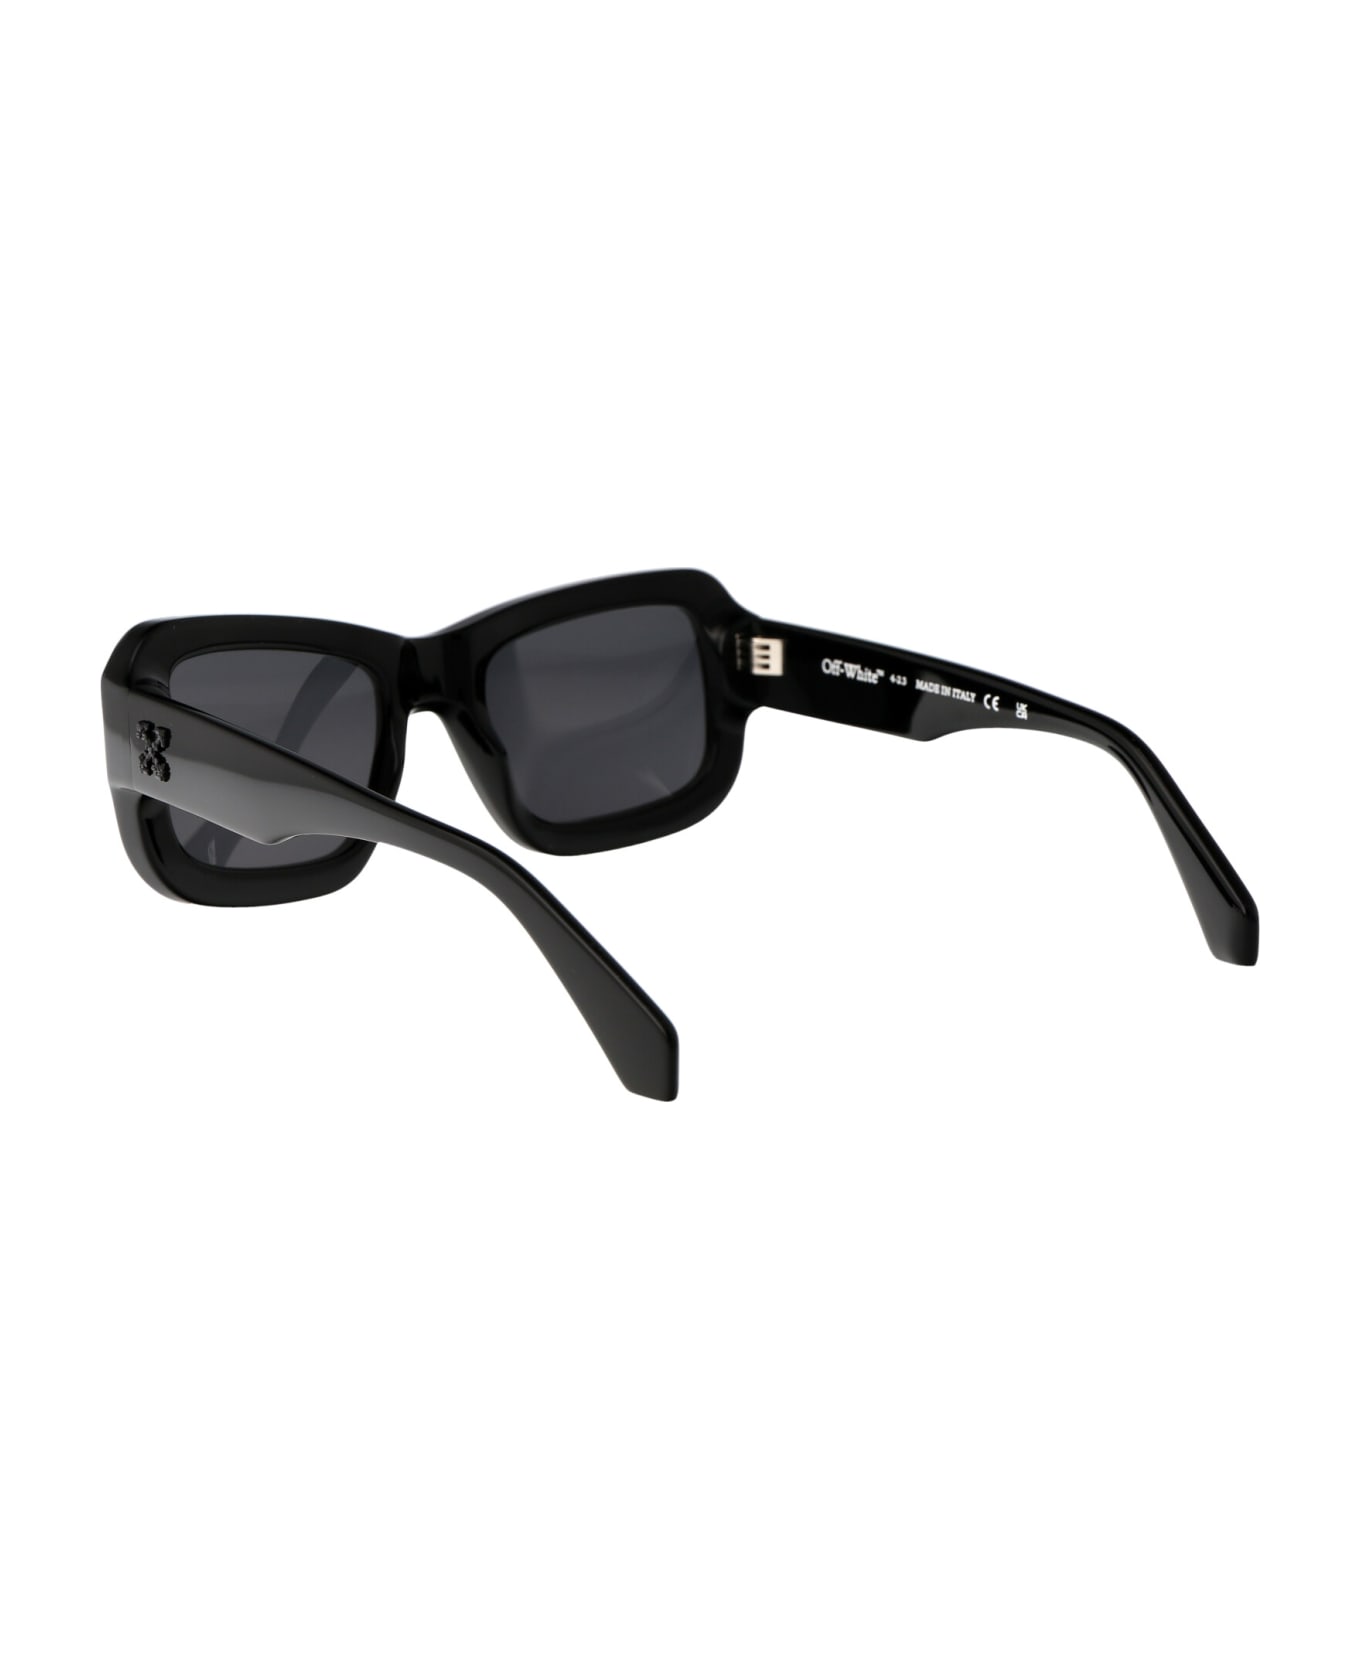 Off-White Verona Sunglasses - 1007 BLACK